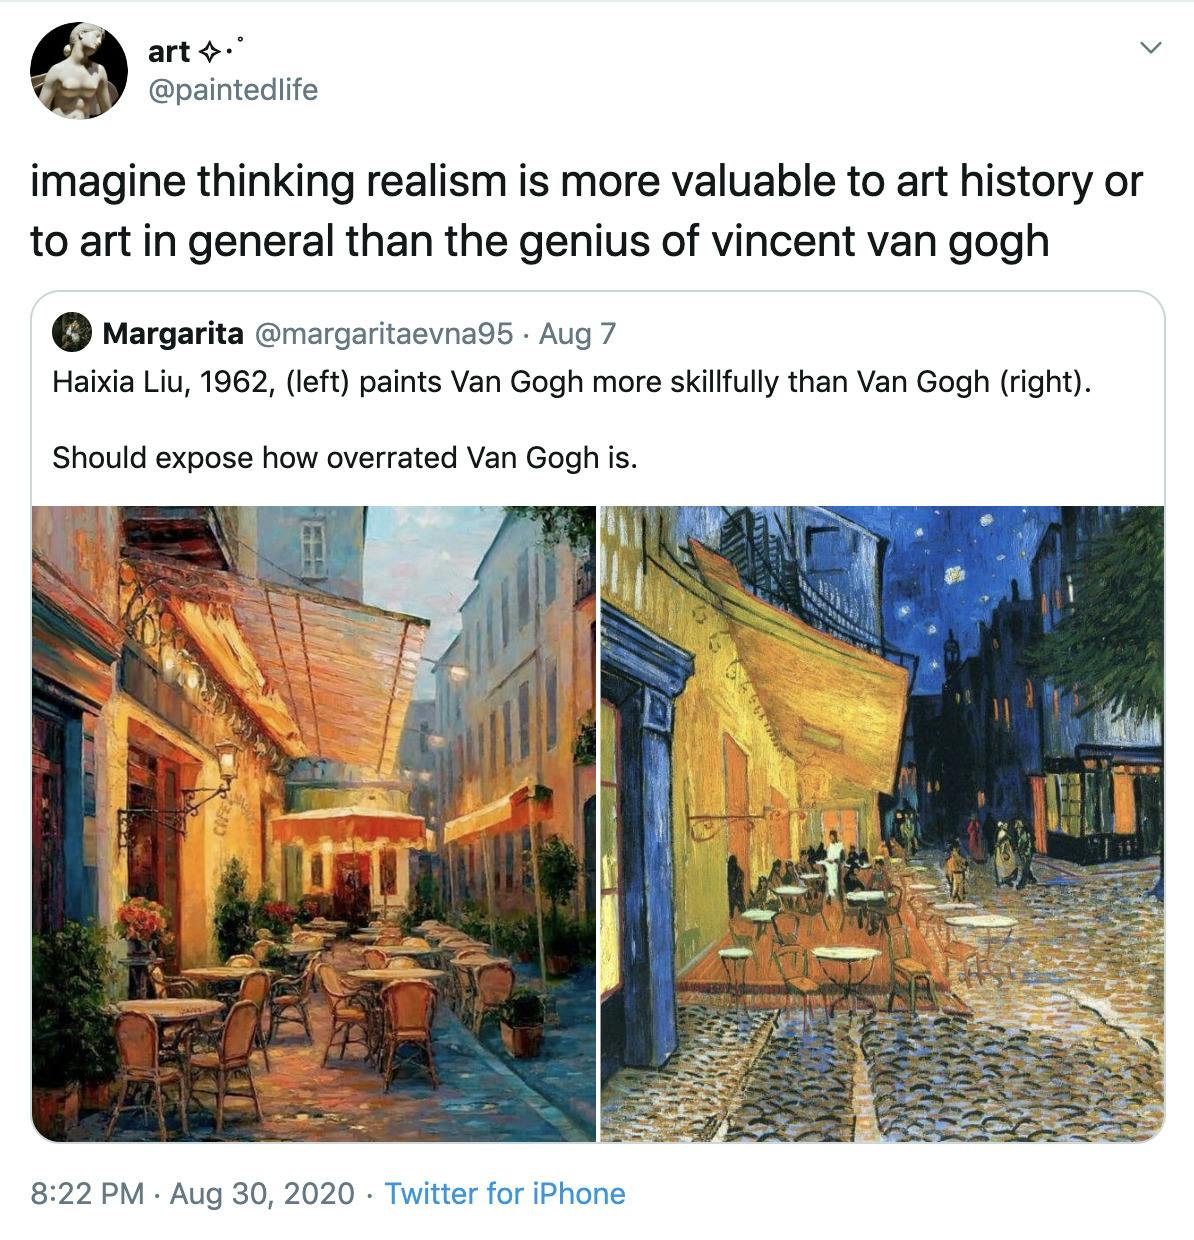 "The fetishization of realism kills art." screenshot of original tweet